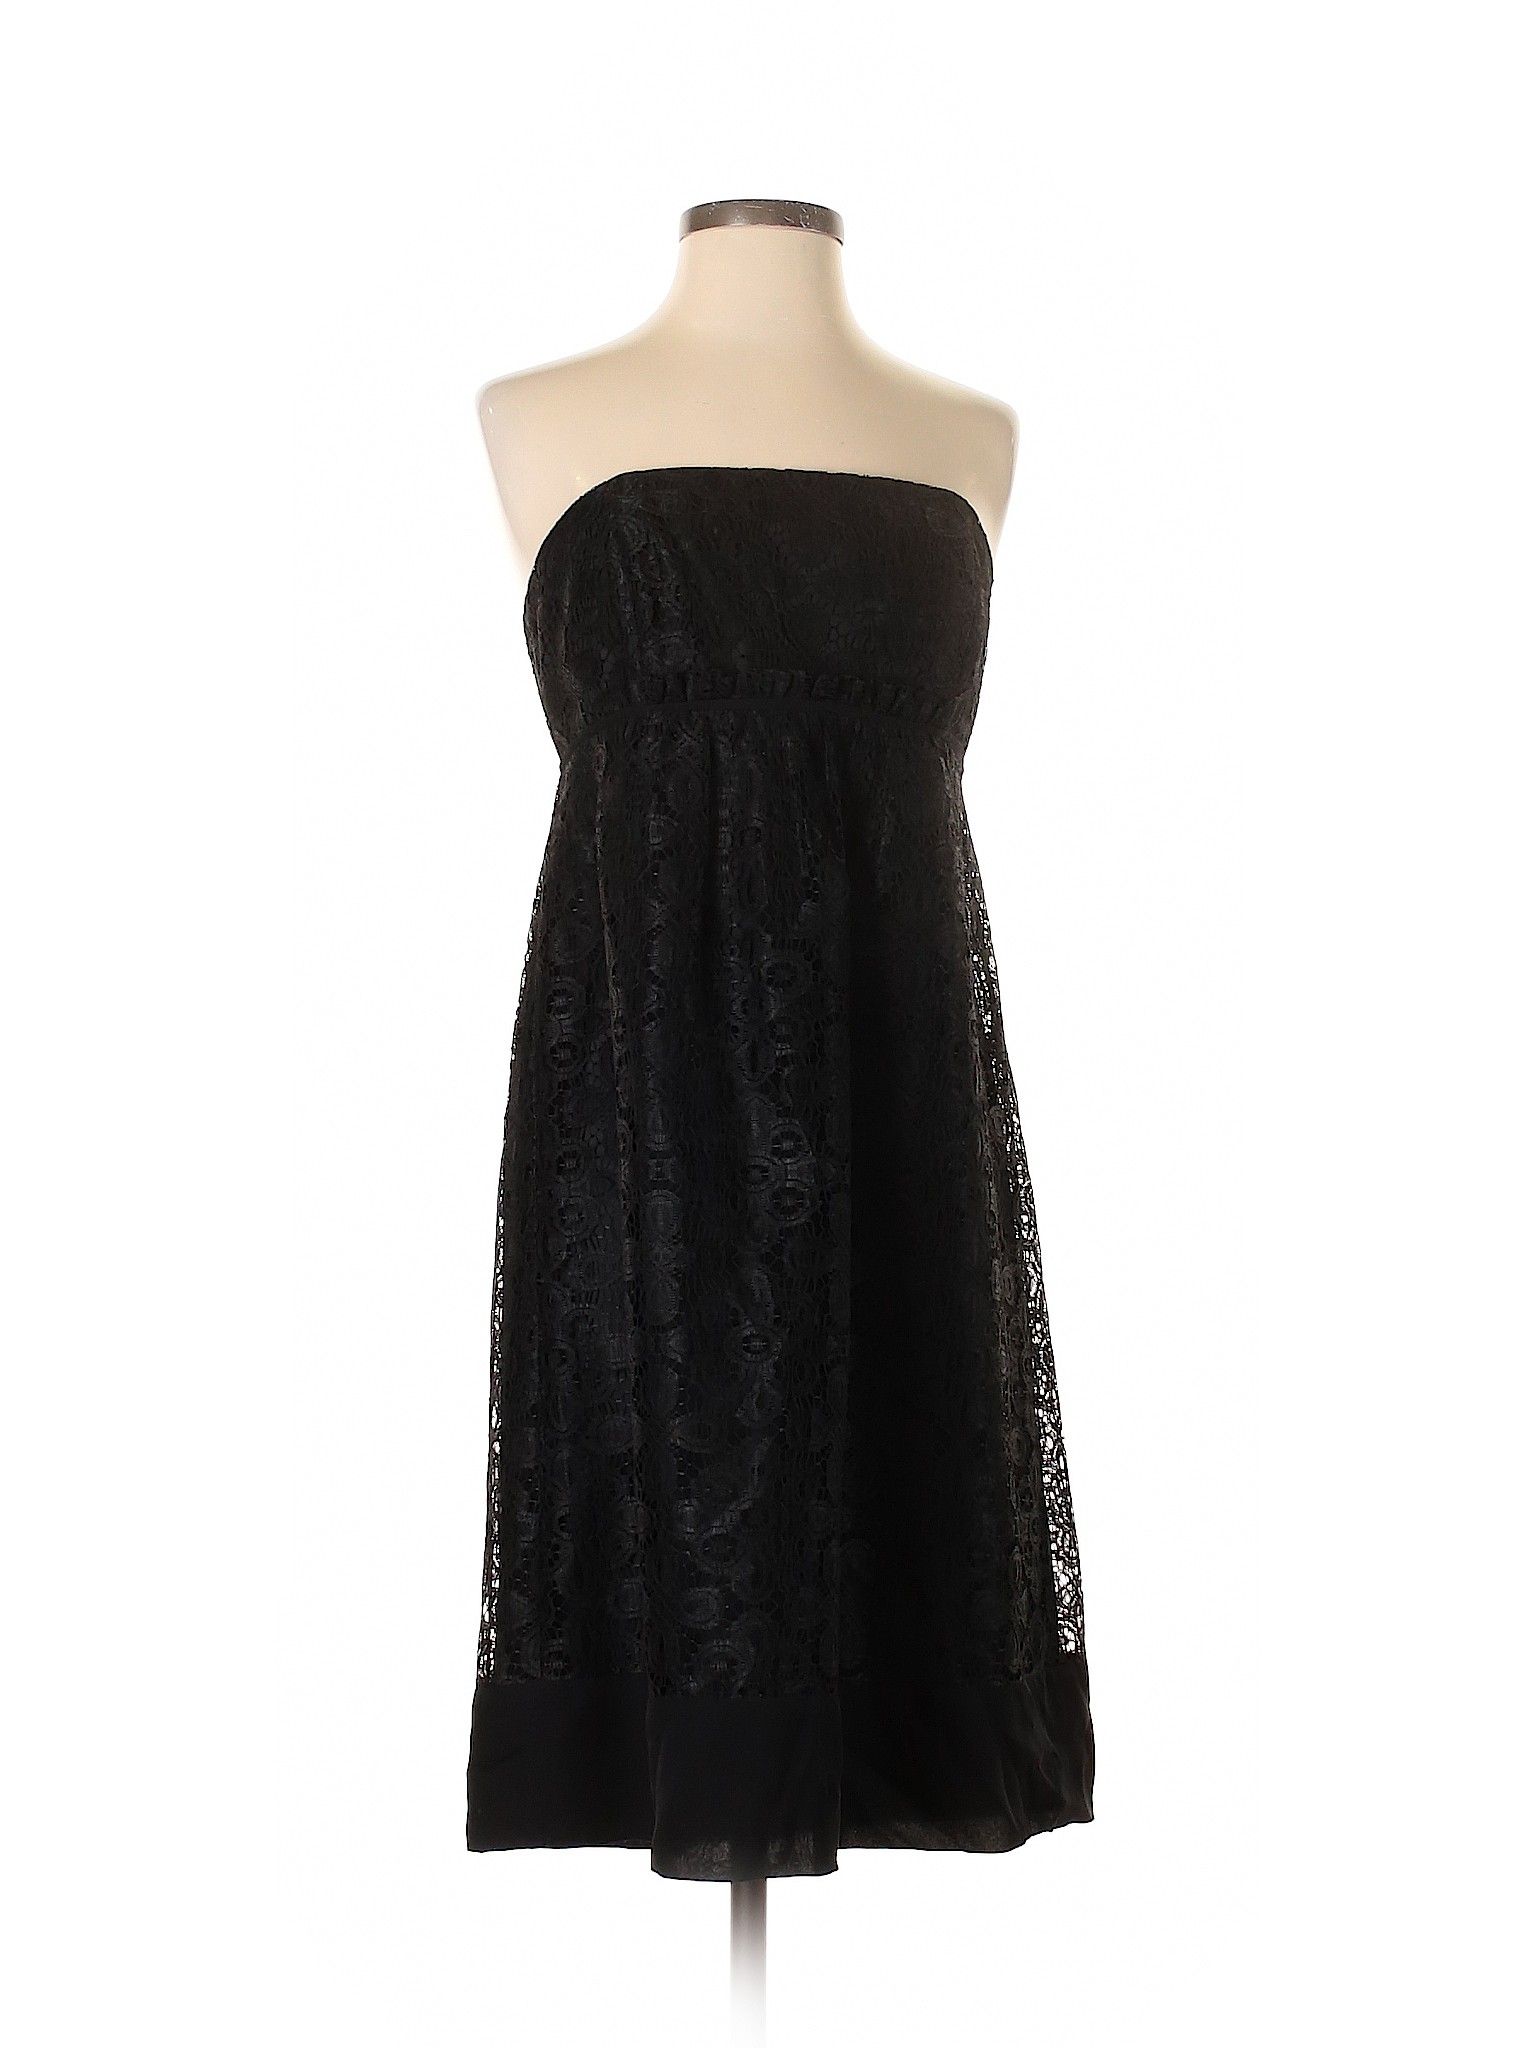 Shoshanna Women Black Cocktail Dress 6 | eBay